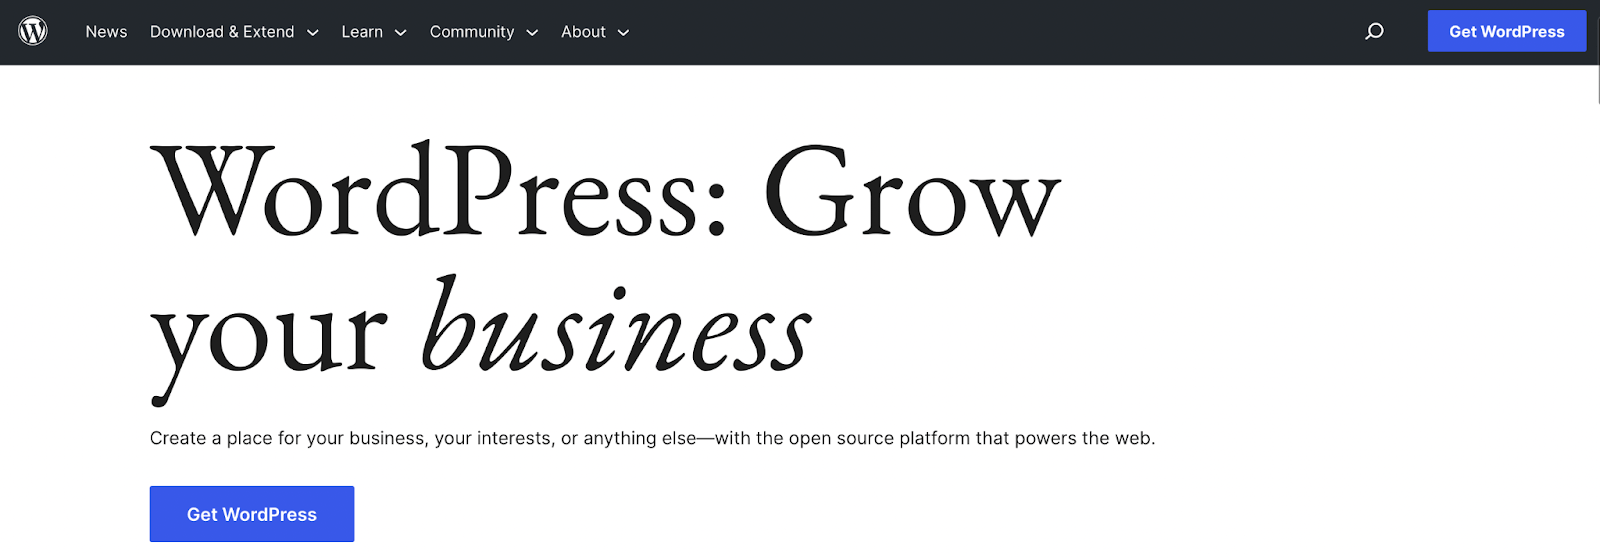 WordPress.org.